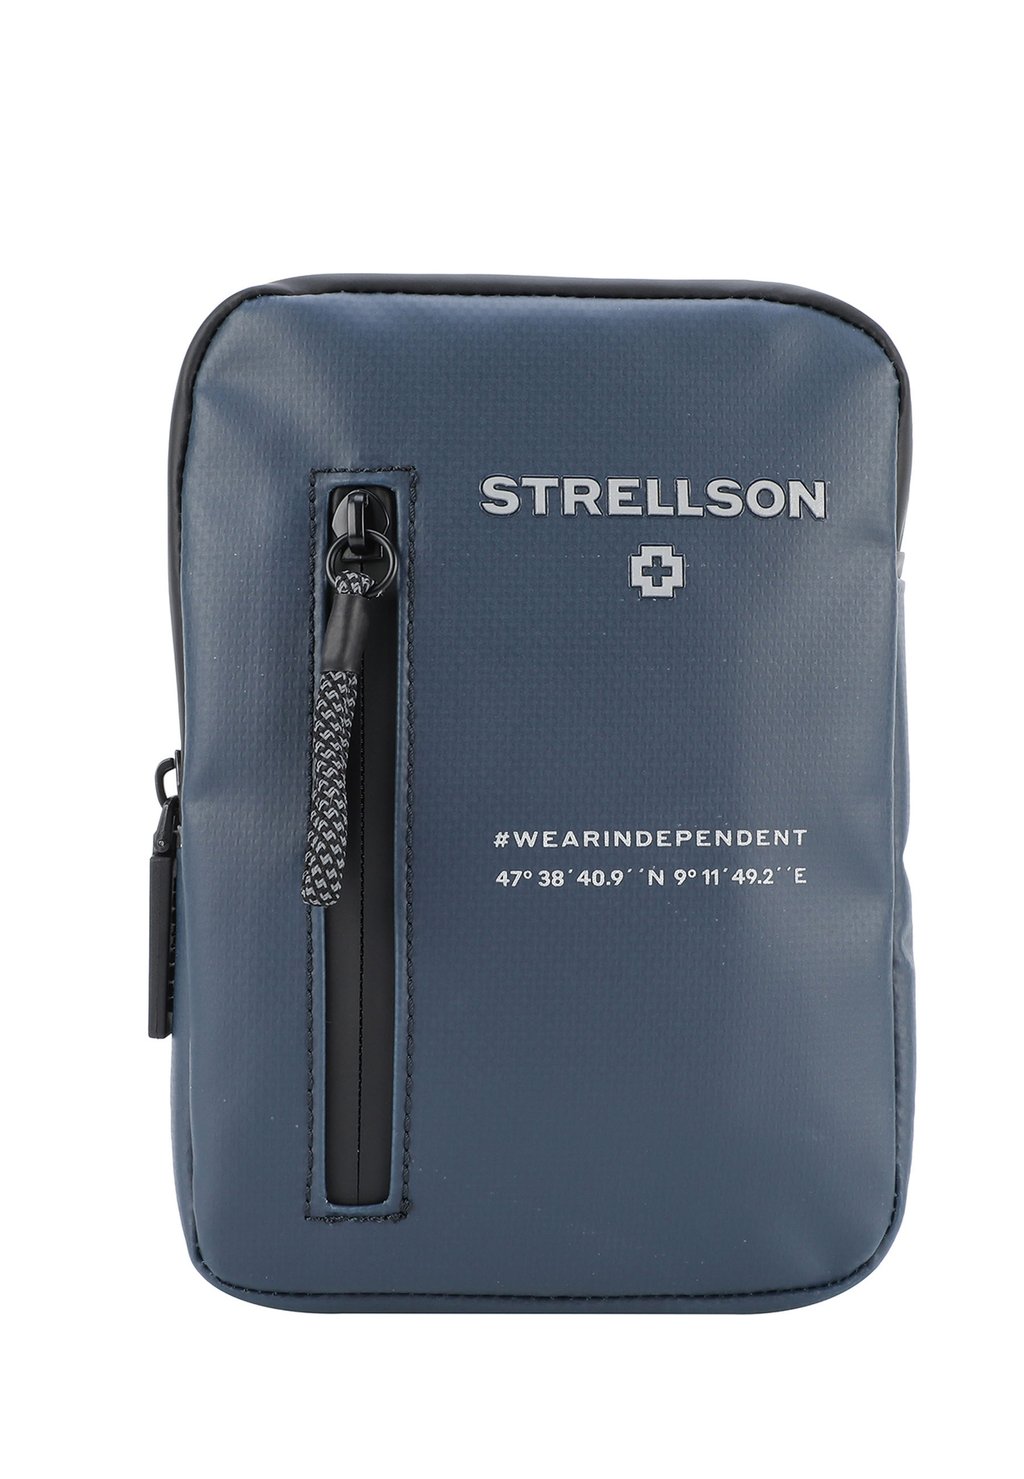 Сумка через плечо STOCKWELL Strellson Premium, цвет darkblue сумка через плечо strellson premium цвет darkgrey